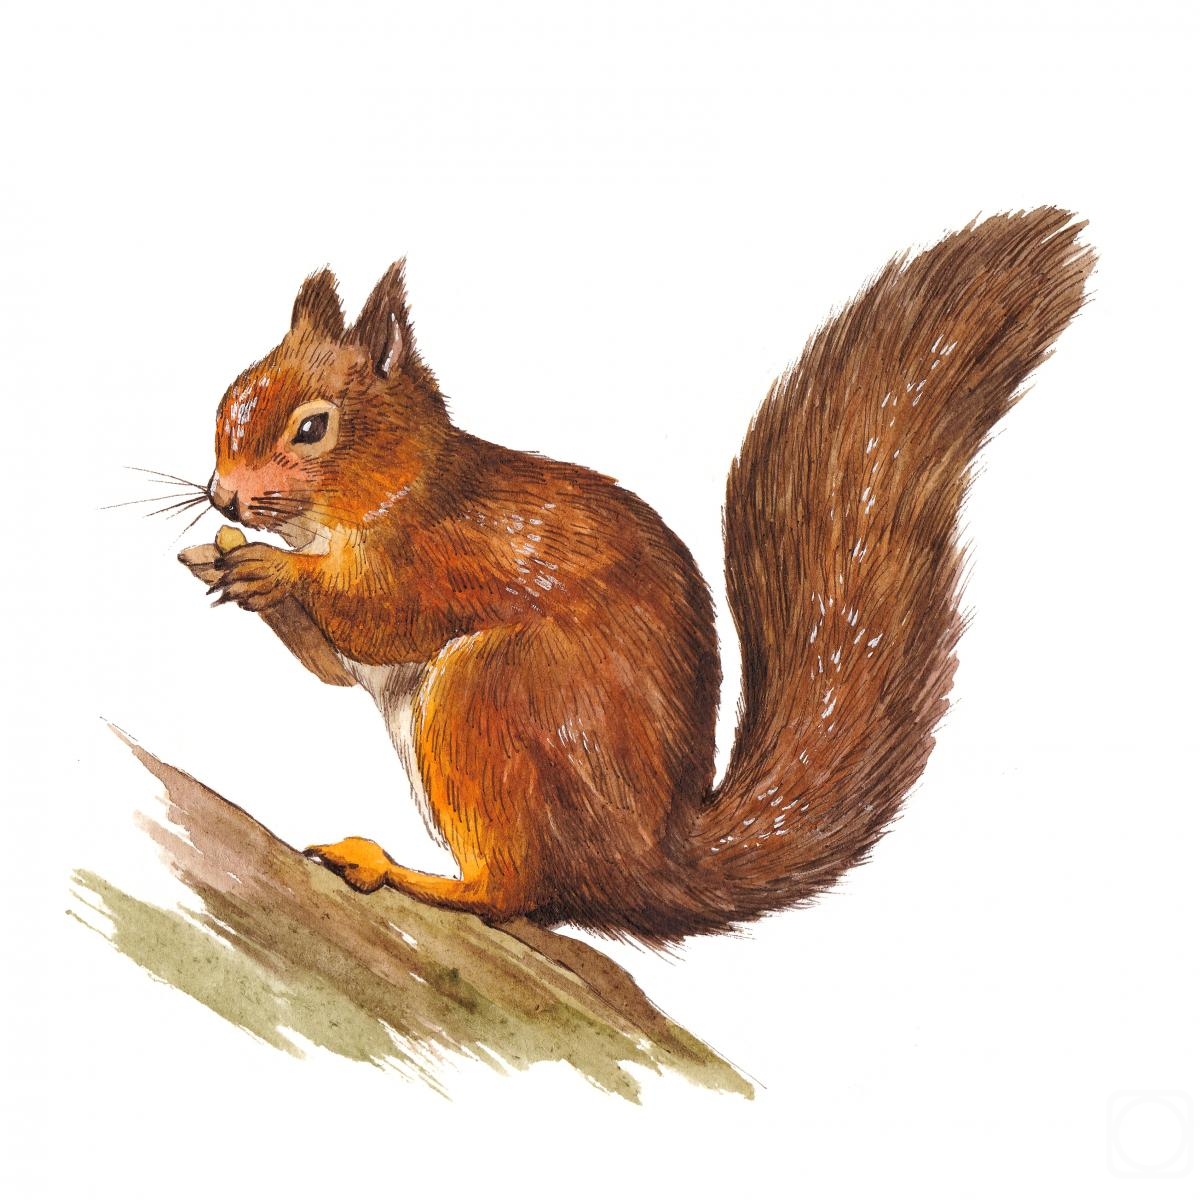 Prokazyuk Anastasiya. Red squirrel